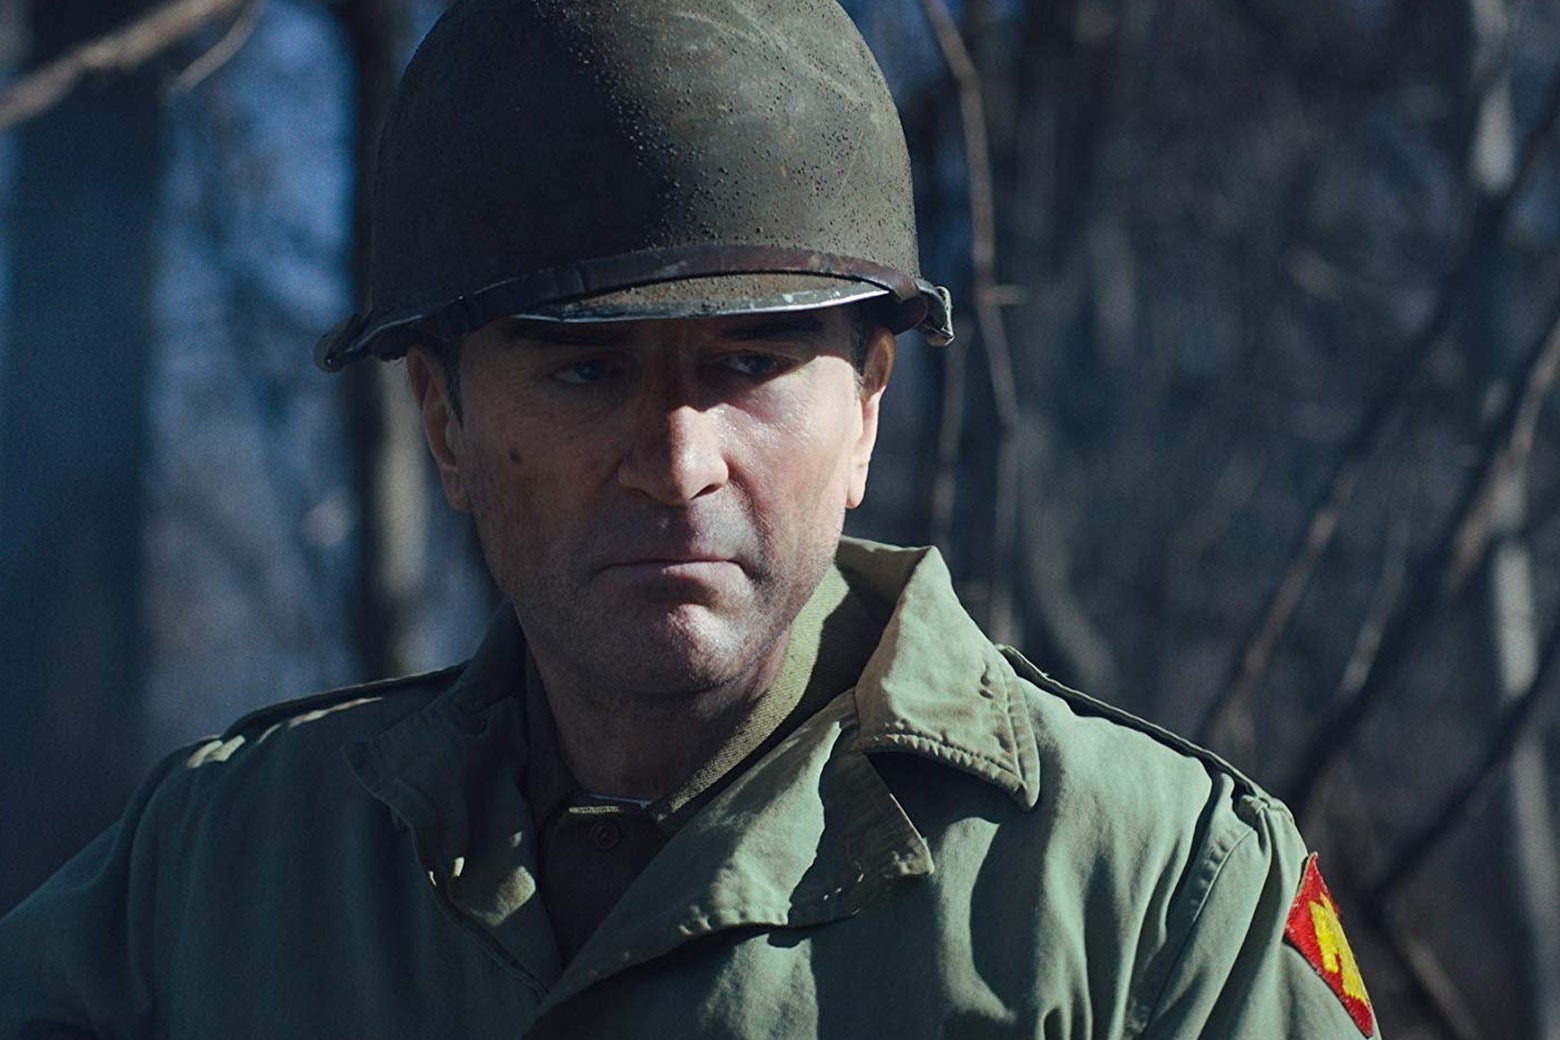 Digitally de-aged Robert De Niro in a soldier's uniform.